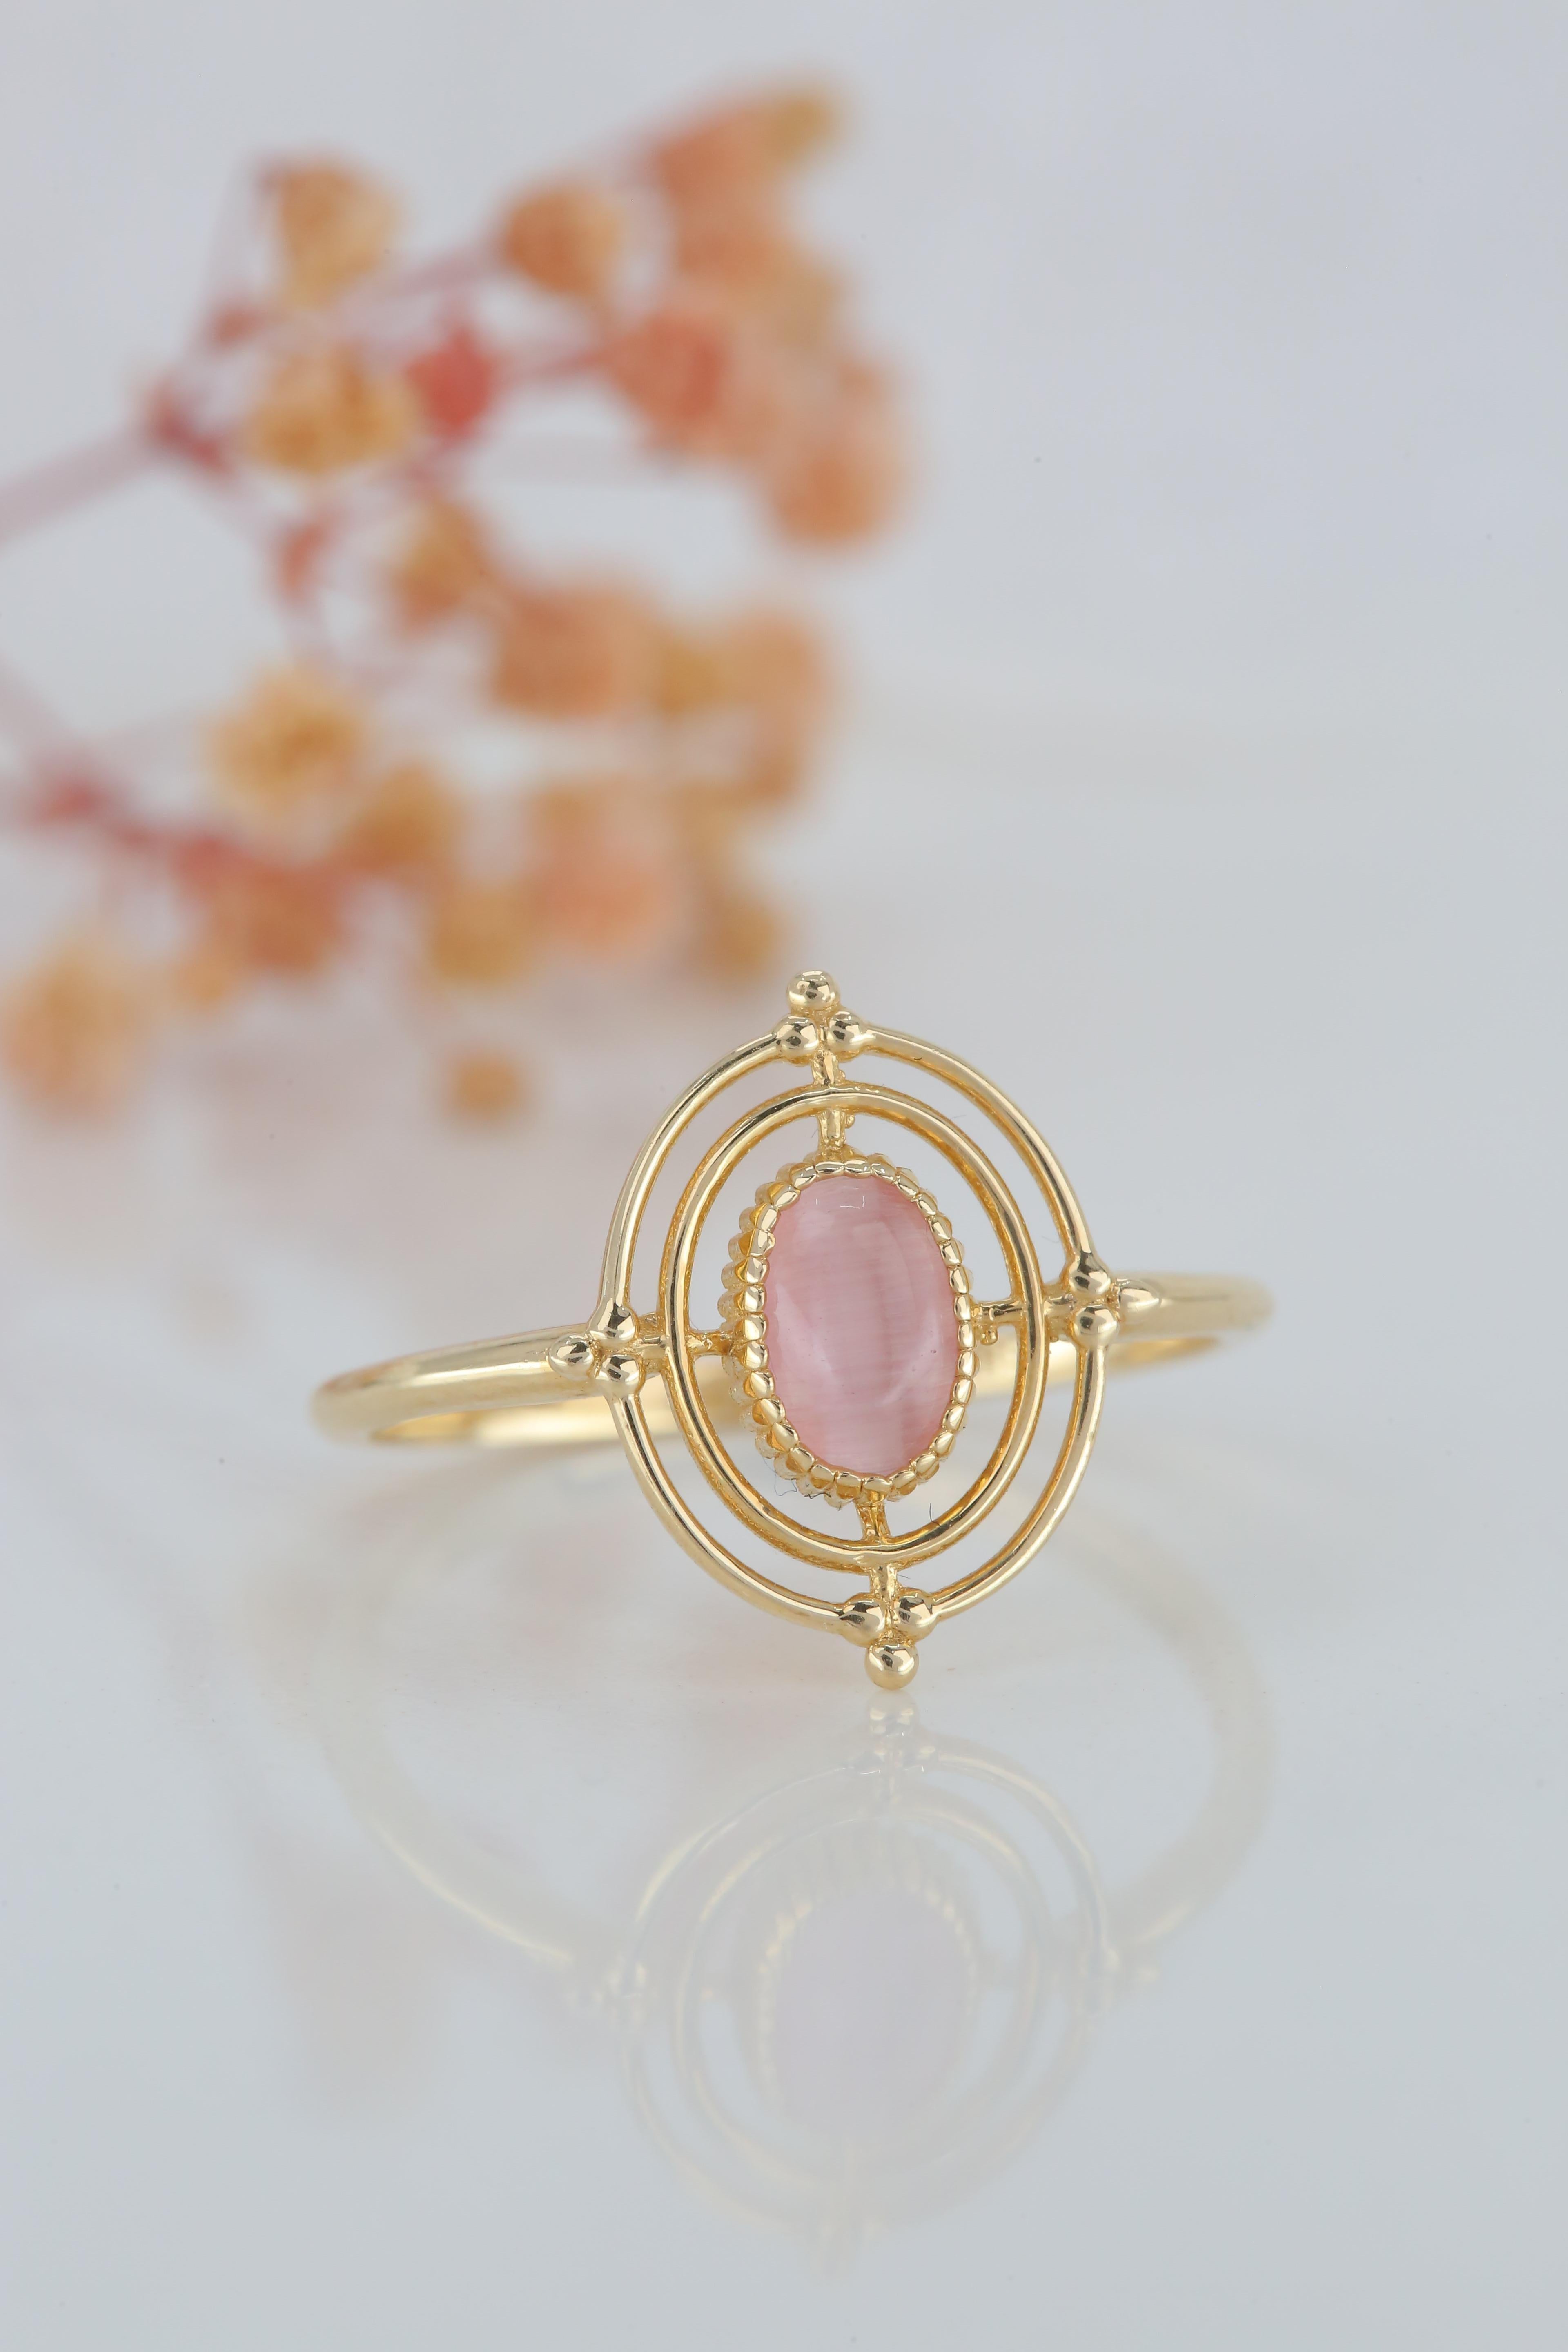 For Sale:  14K Gold Vintage Style Oval Cut Pink Quartz Ring 8